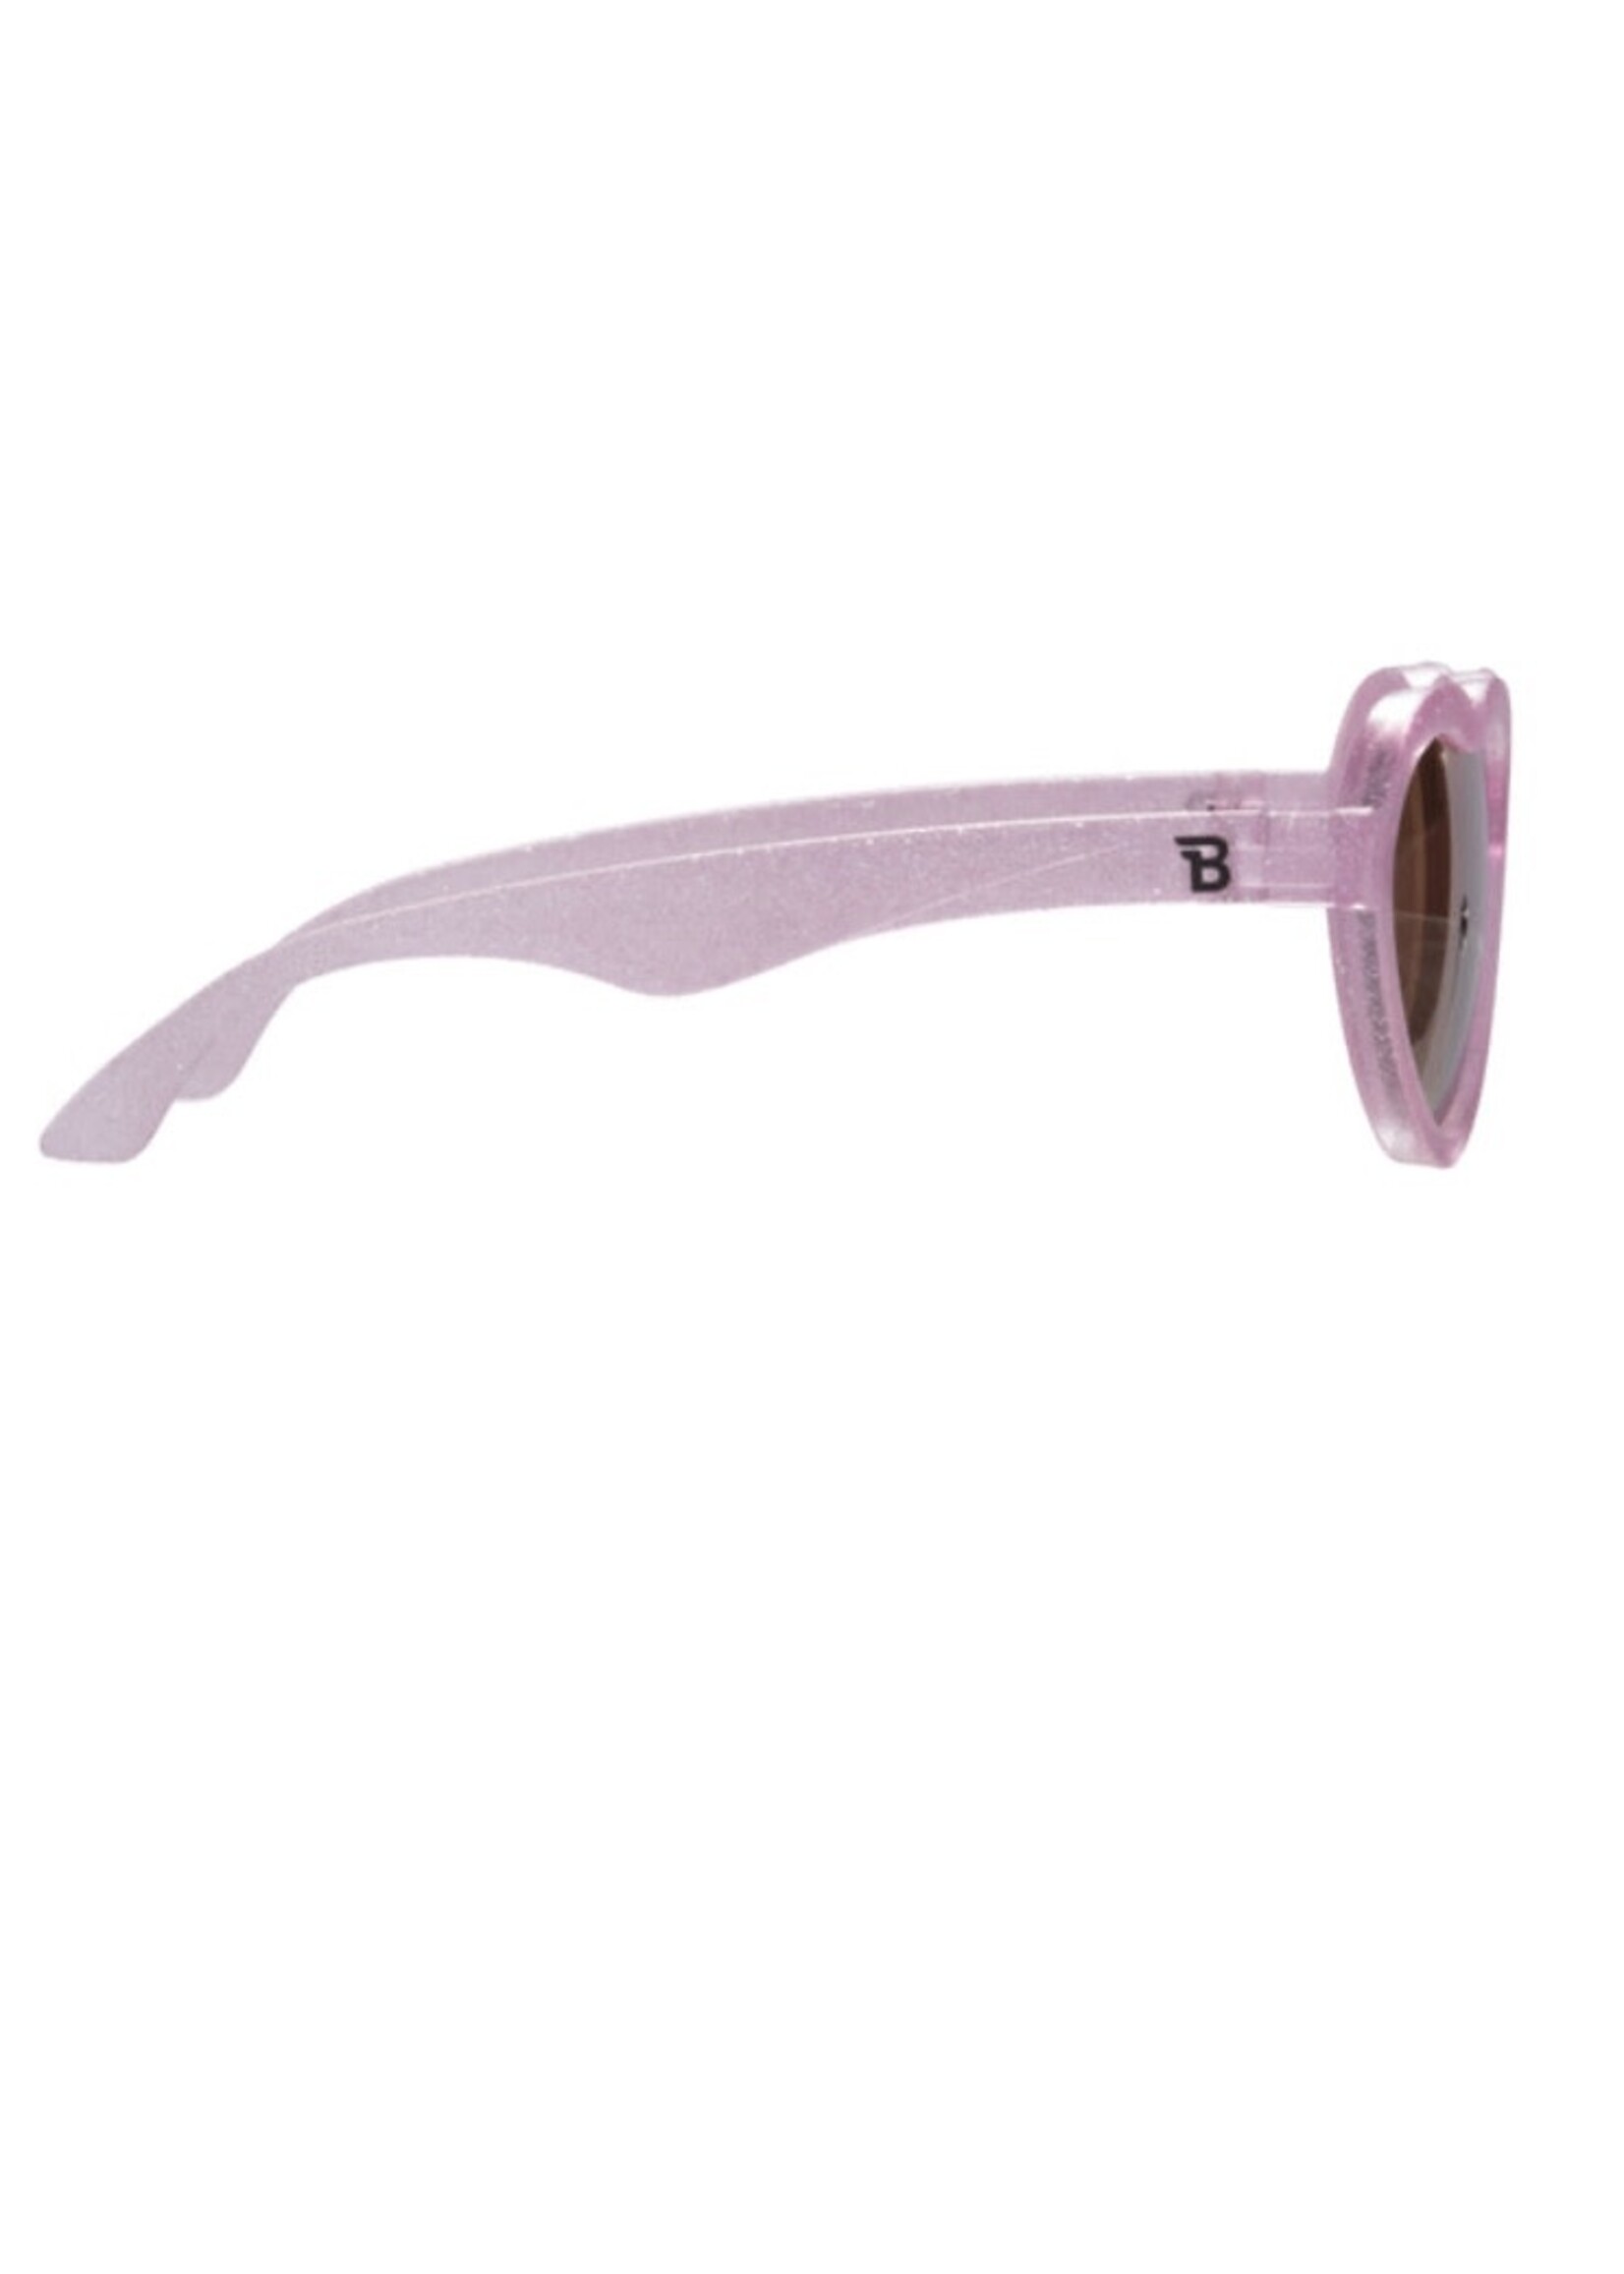 Babiators Babiators, Limited Edition Non-Polarized Mirrored Heart Sunglasses || Sparkle Squad